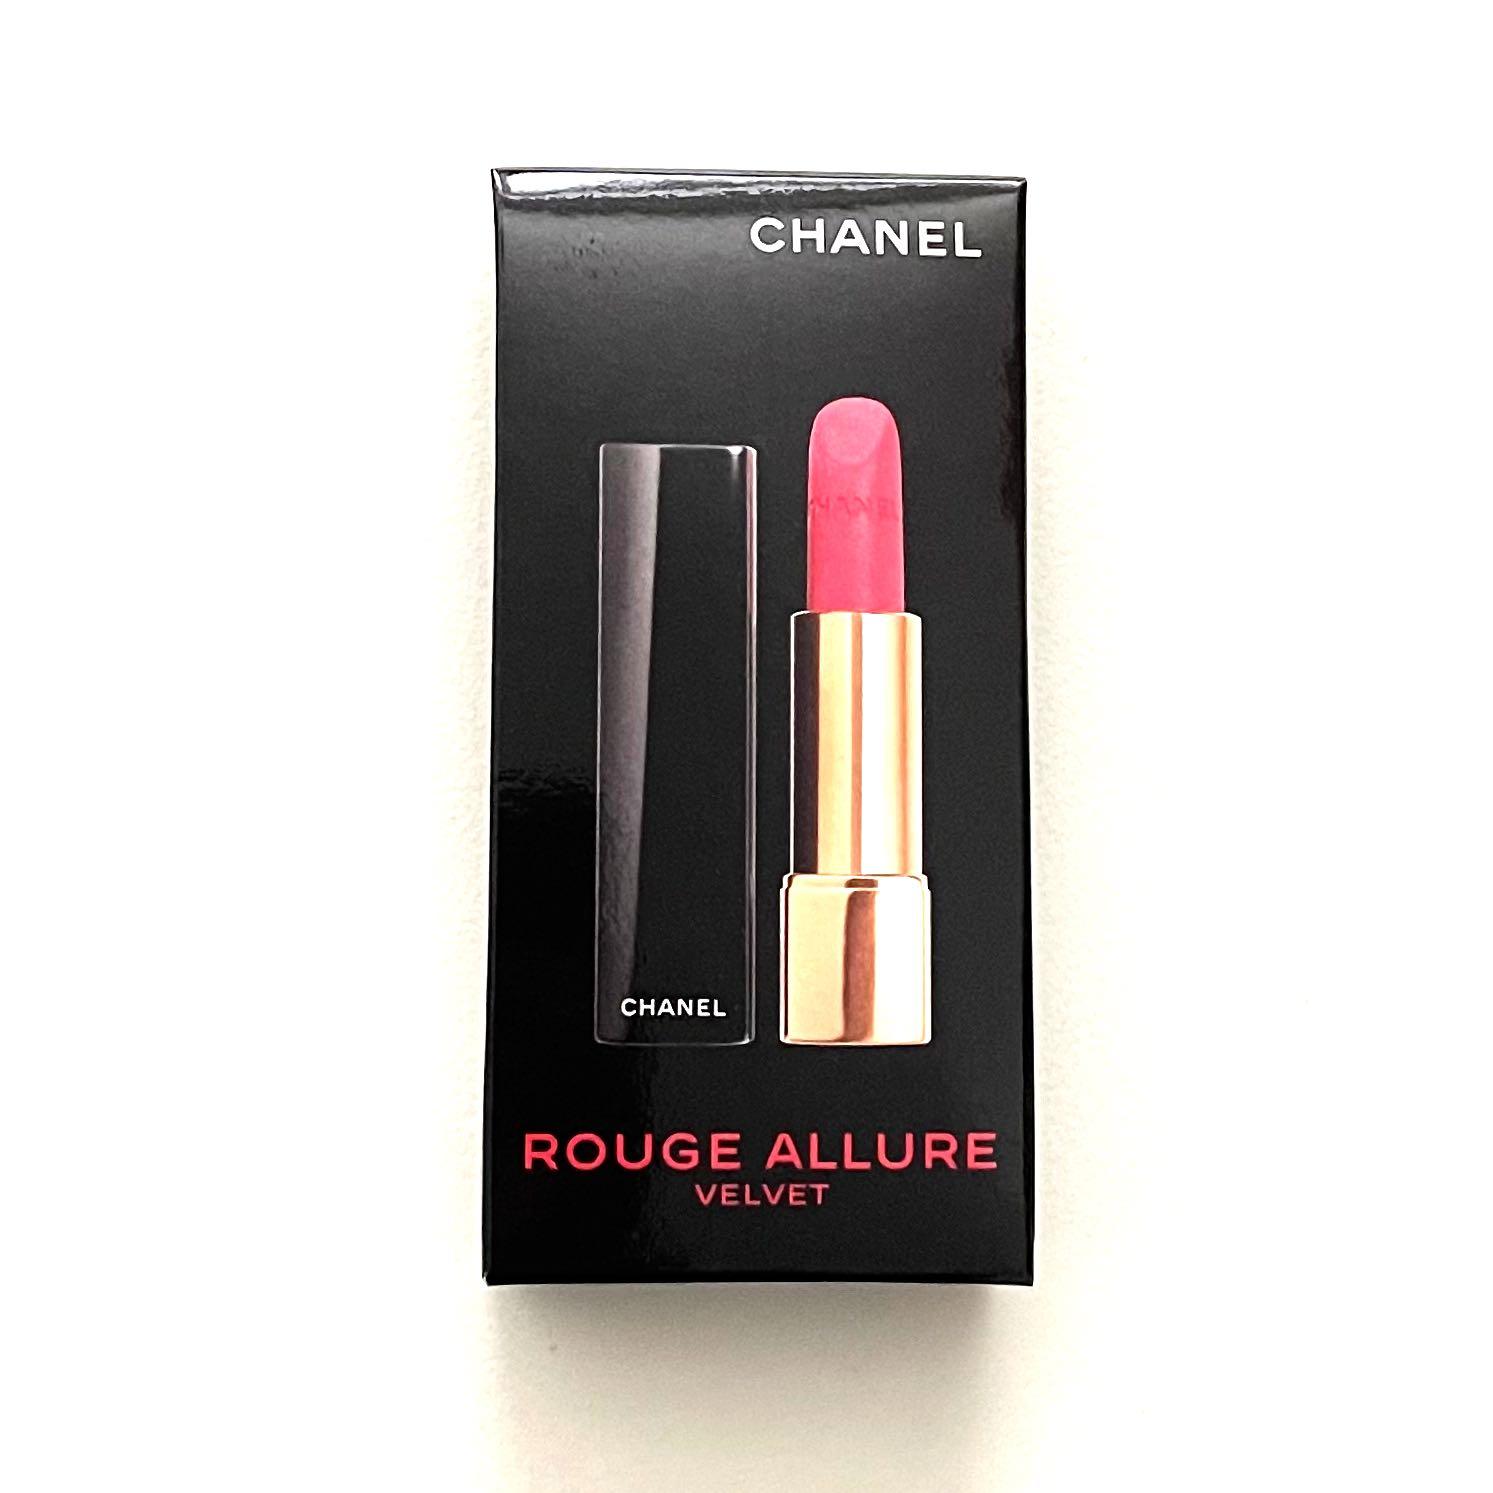 CHANEL #43 LA FAVORITE Mini Lipstick 1g, 美容＆化妝品, 健康及美容- 皮膚護理, 化妝品- Carousell